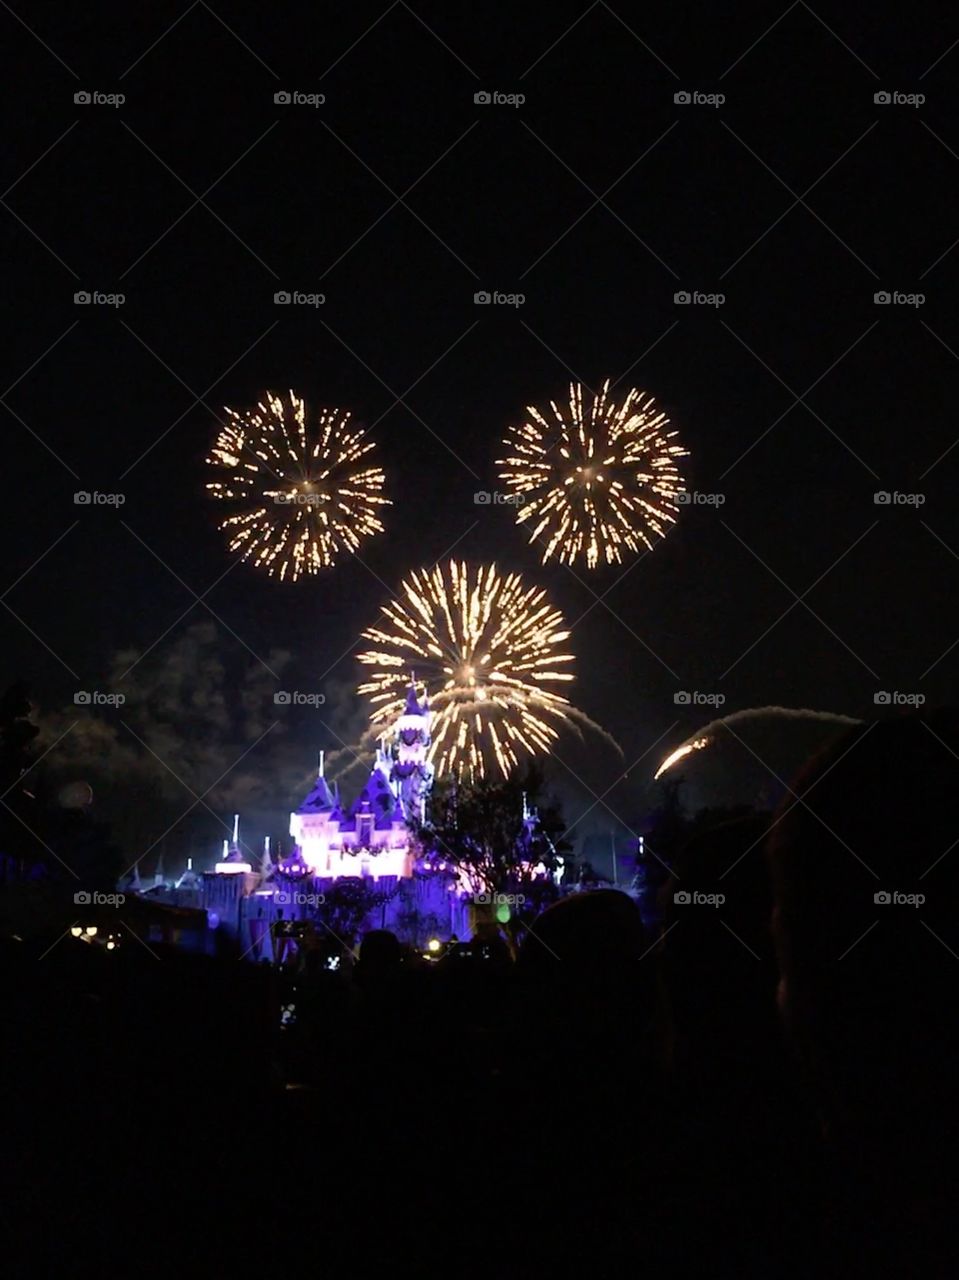 Amazing fireworks at Disneyland California!